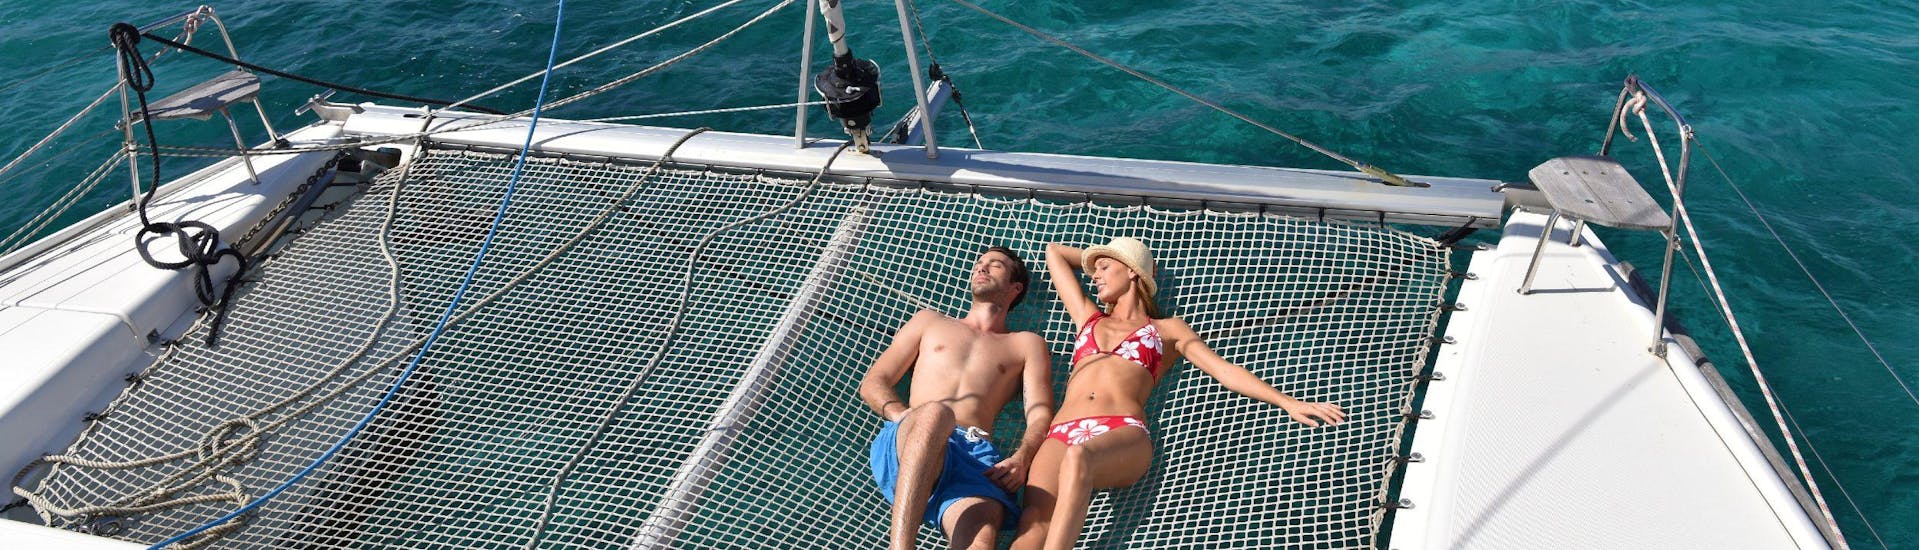 Un couple prend un bain de soleil sur un catamaran.